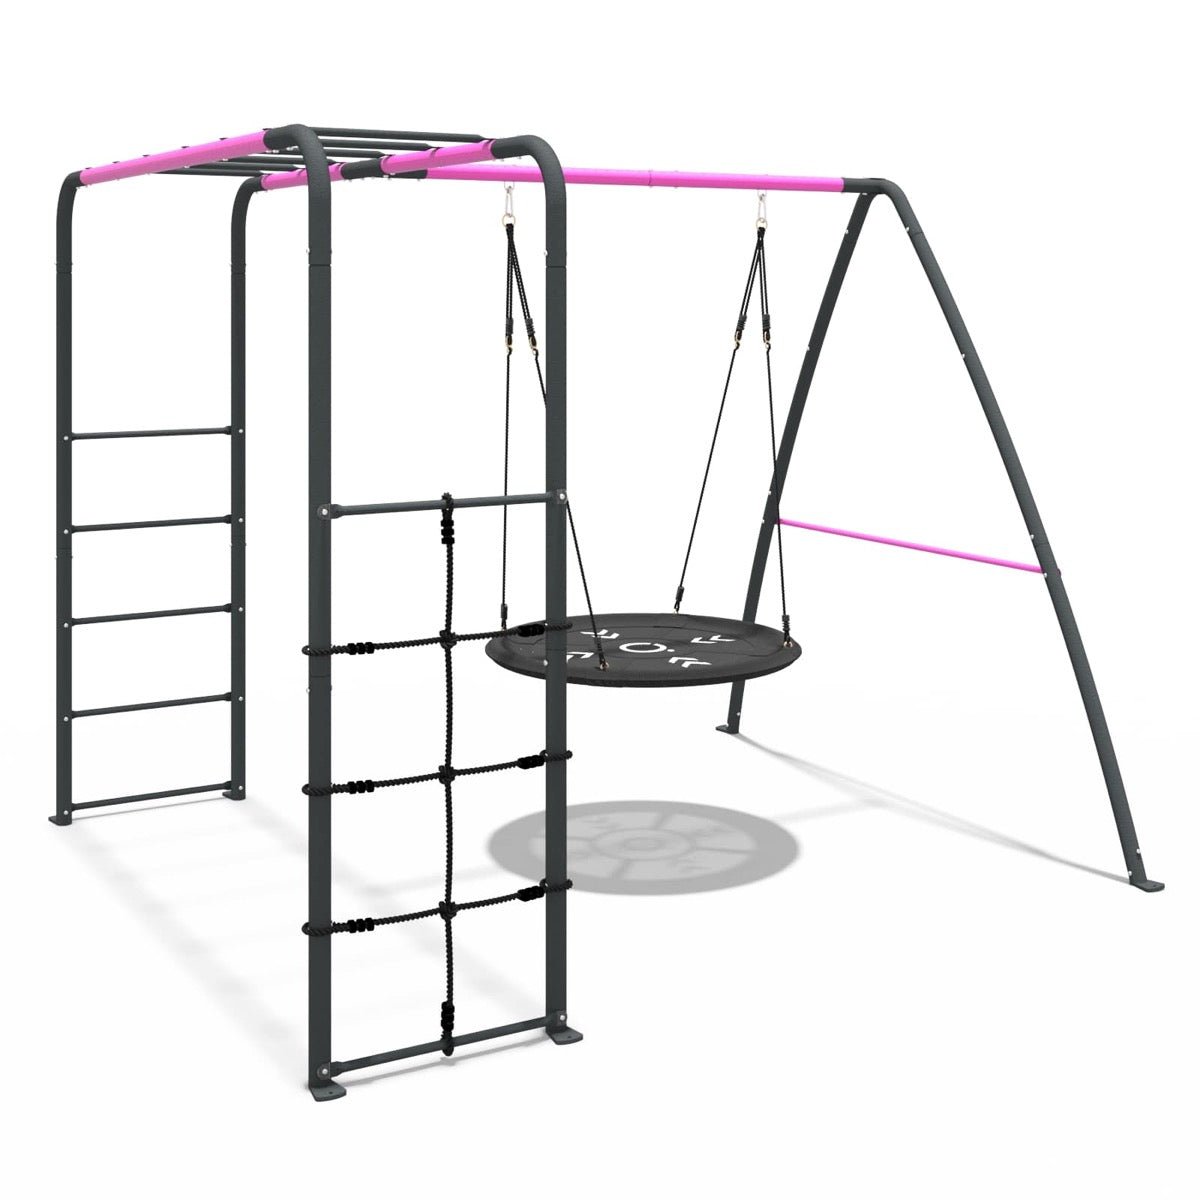 Rebo Steel Series Metal Swing Set with Monkey Bars - Nest Swing Pink